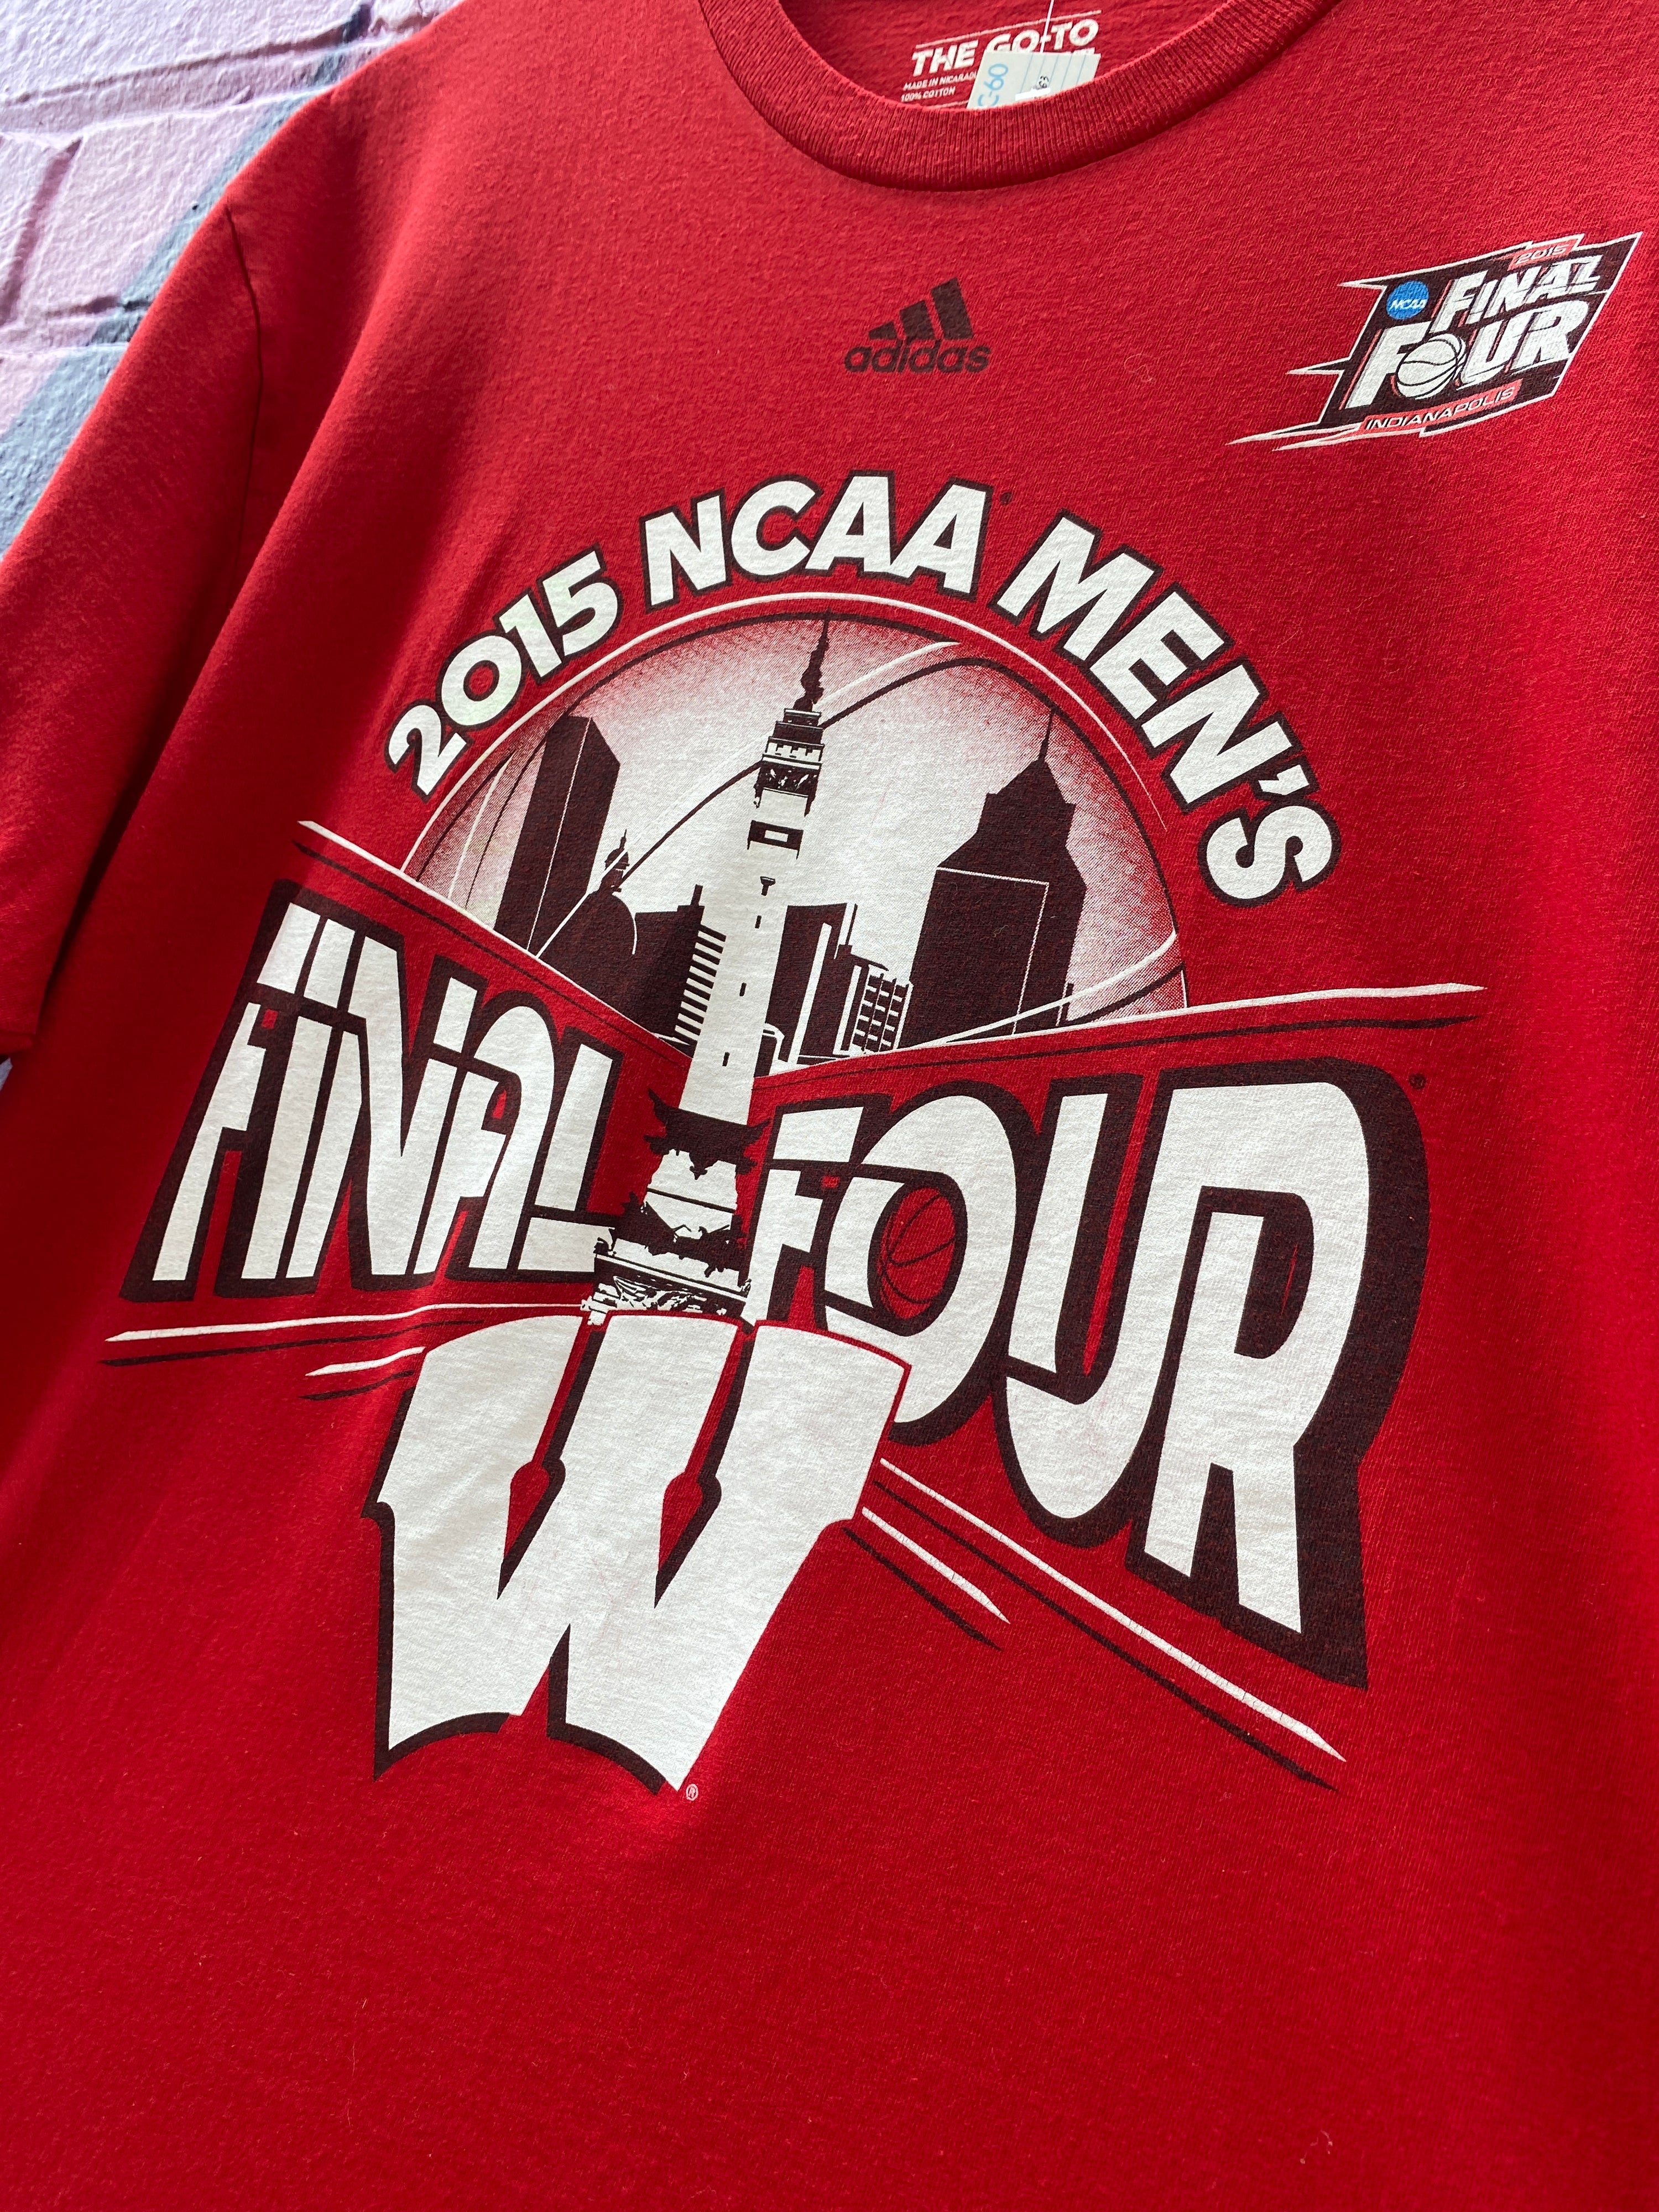 L - Adidas 2015 NCAA Men's Final Four Red Tee